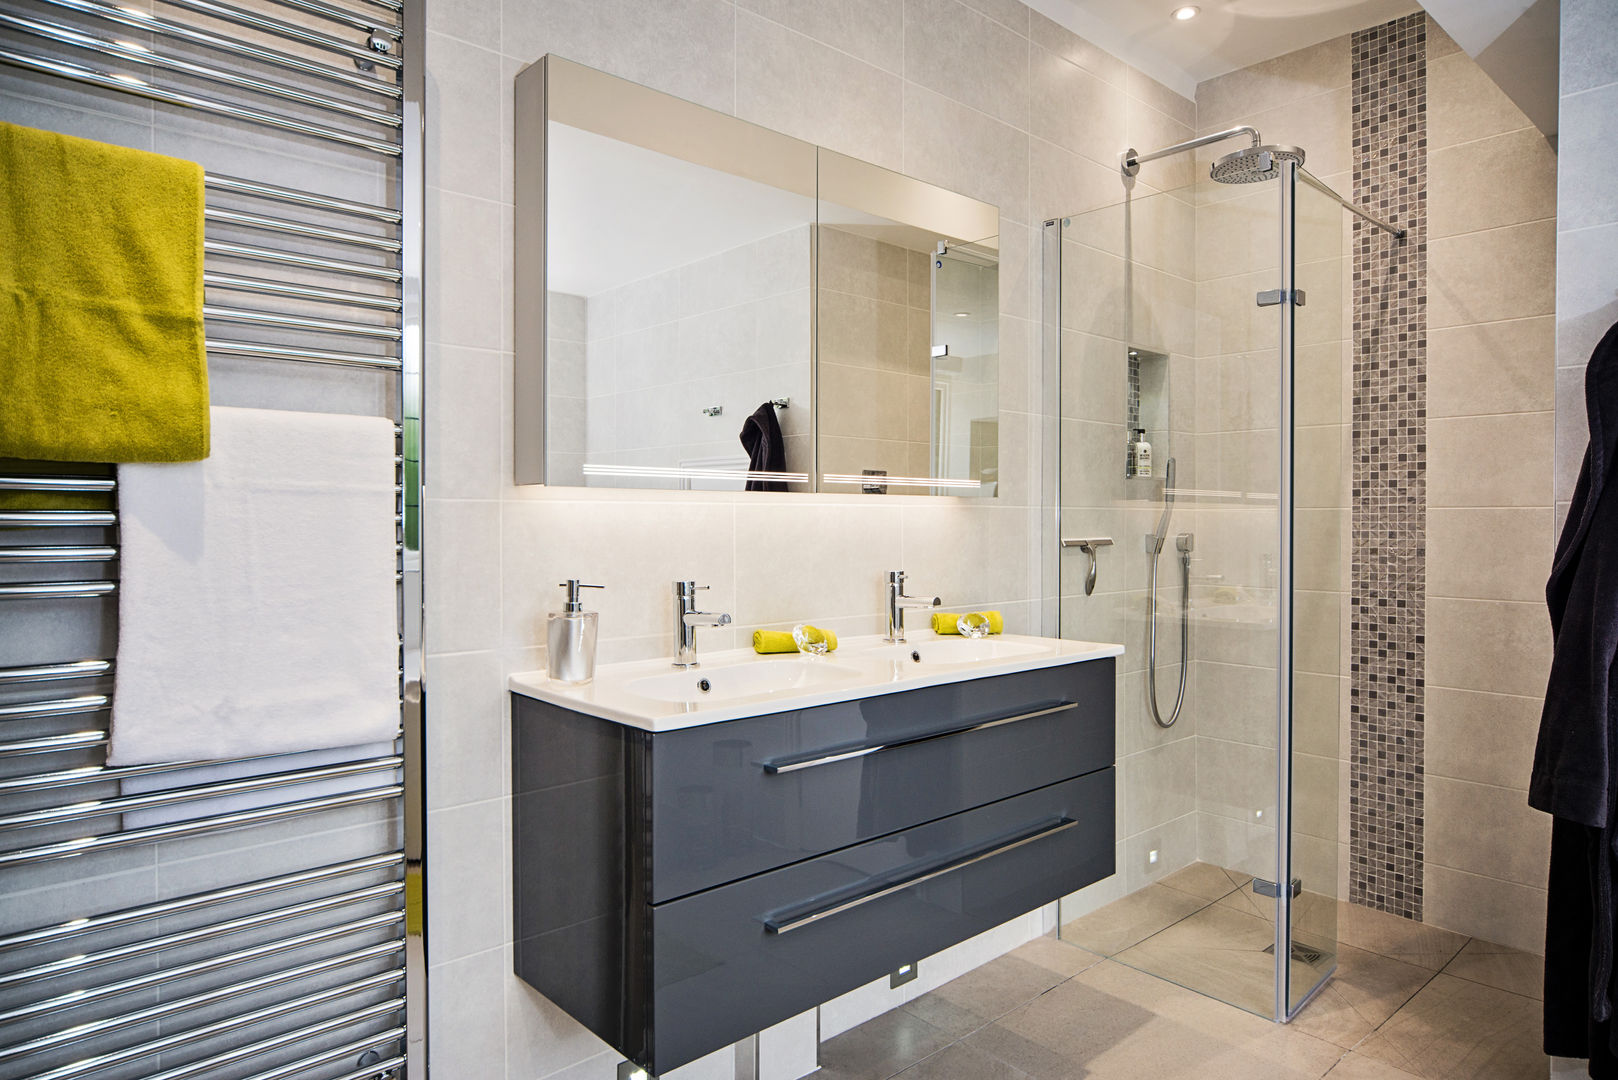 Mr & Mrs D, En-Suite, Guildford Raycross Interiors حمام bathroom design,installation,mosaic tiles,walk-in shower,free-standing bath,mirror cabinet